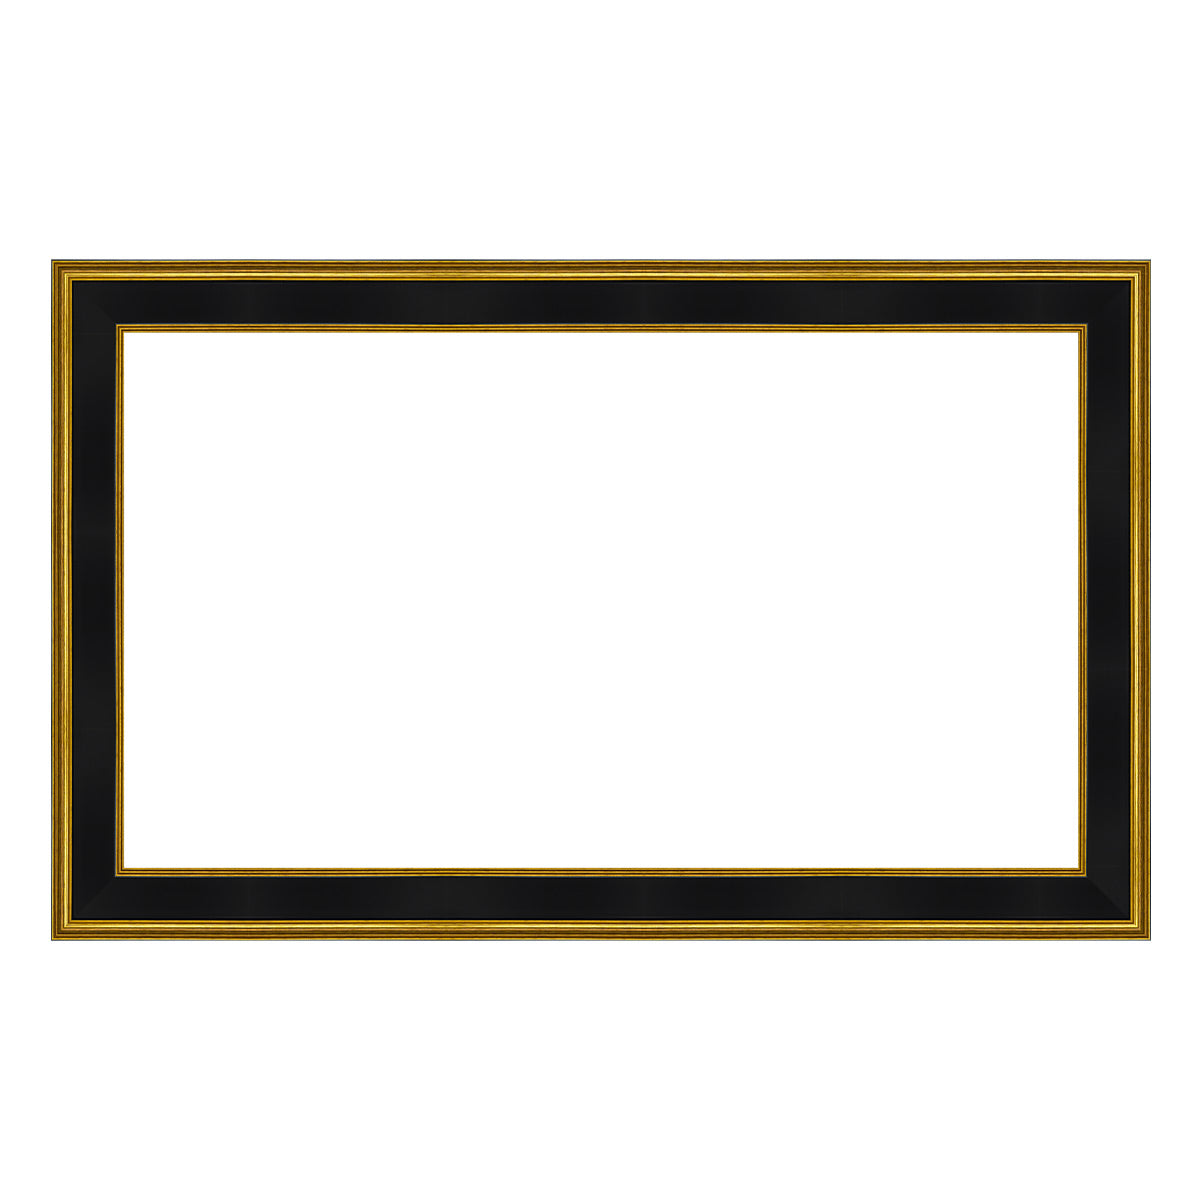 Deco TV Frames 65" Customizable Frame for Samsung The Frame TV 2021-2023 (Antique Gold & Black)